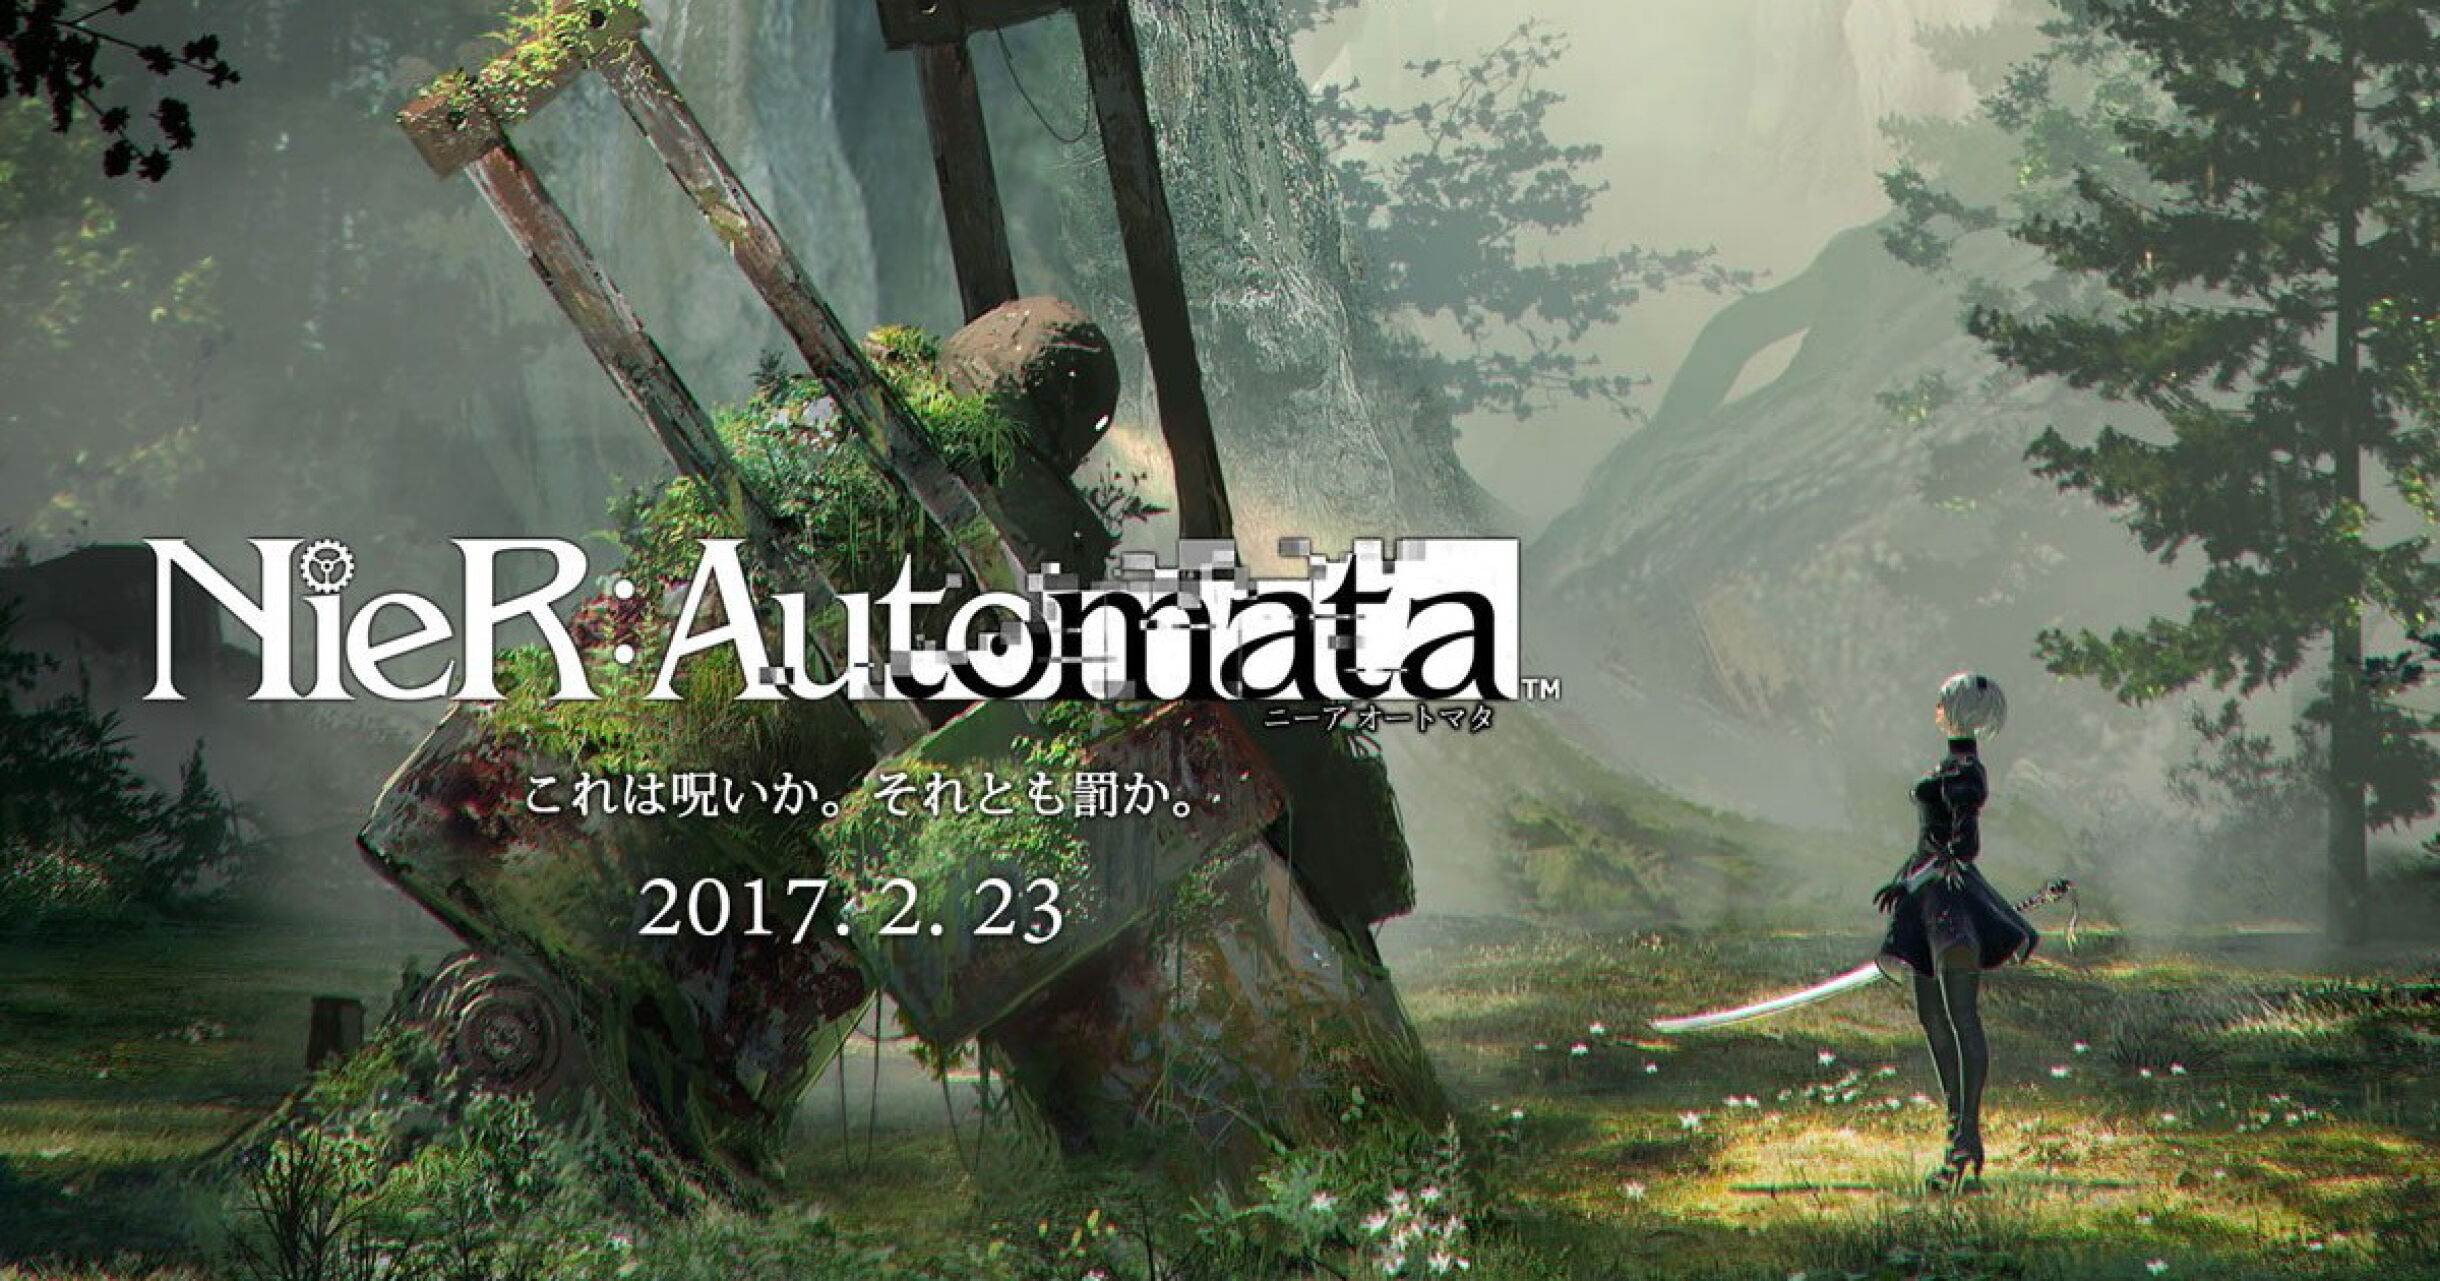 NieR:Automata Ver1.1a Anime Finally Sets Return Date